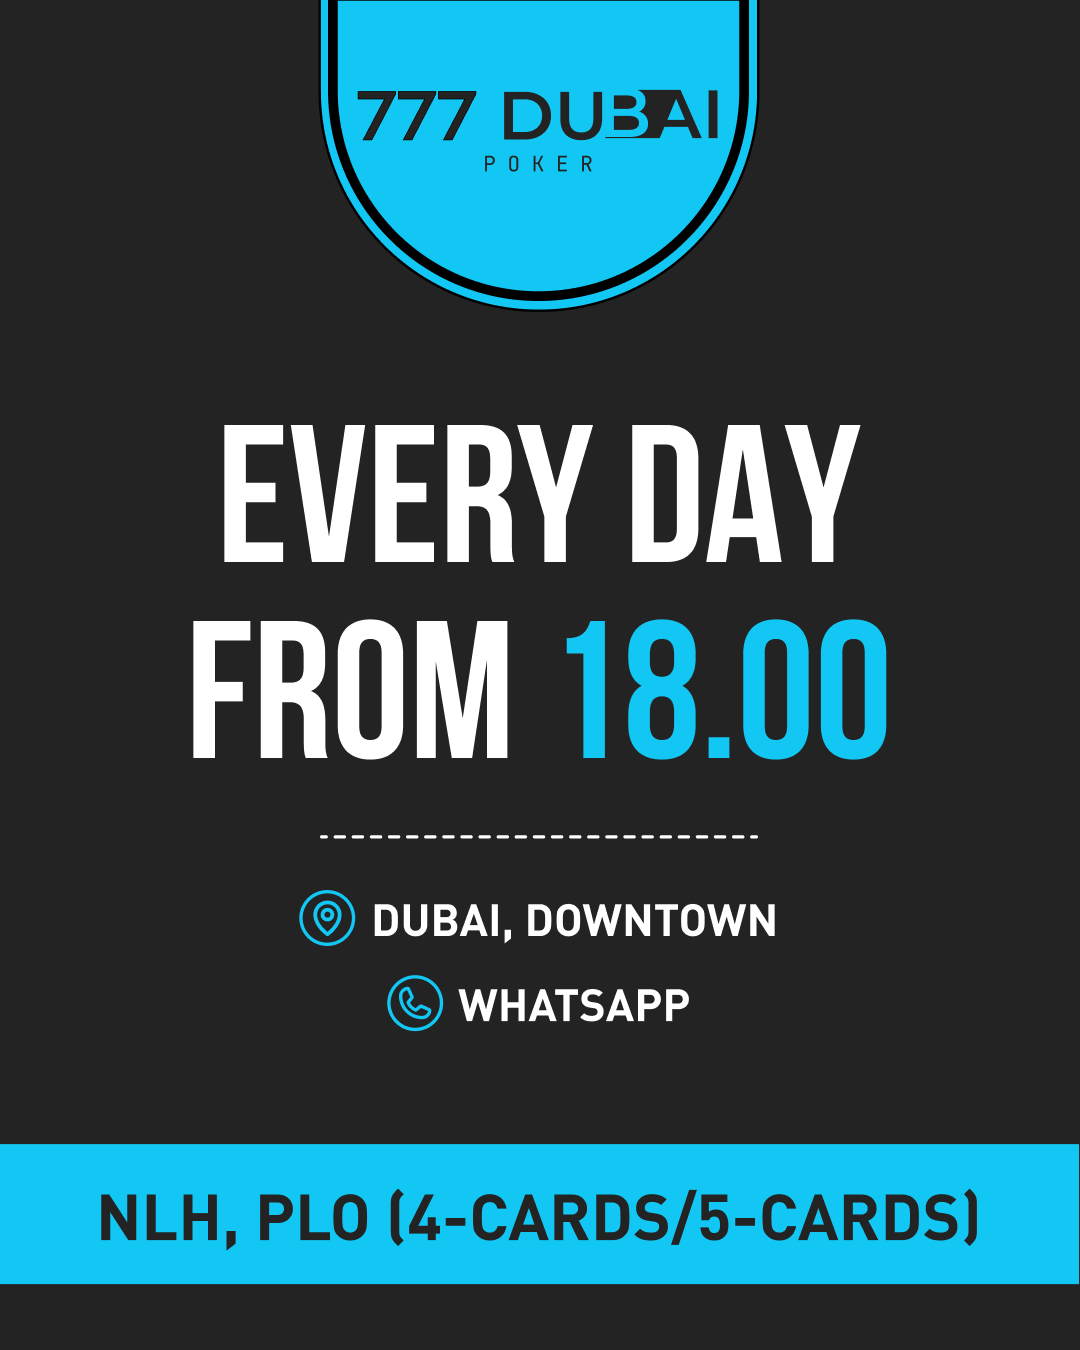 777 DUBAI POKER | Daily Poker games in the heart of Downtown Dubai